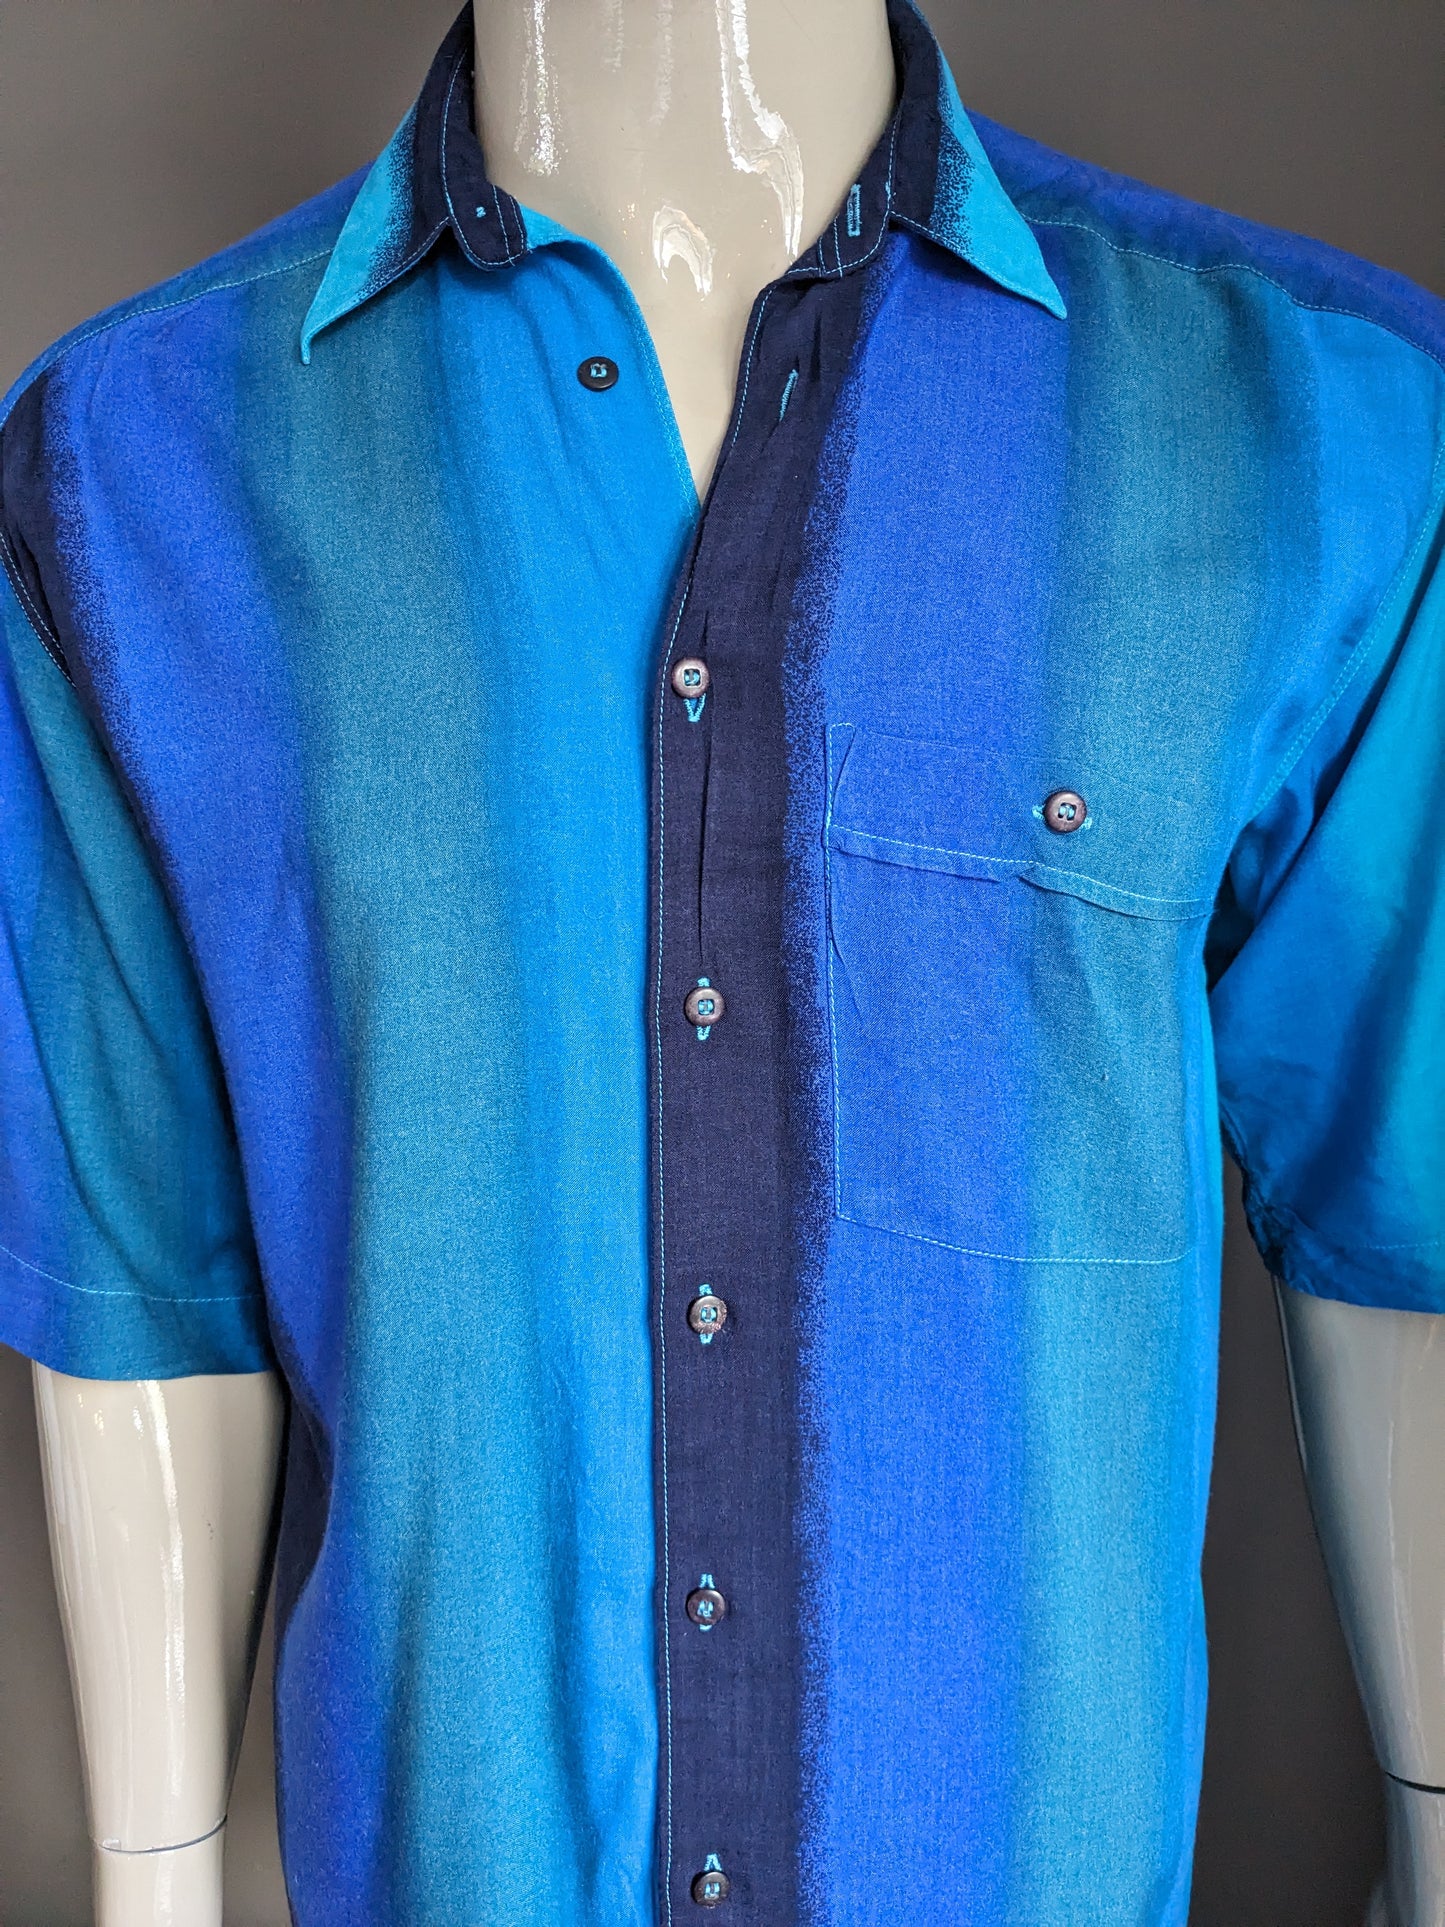 Shirt corto in stile business 80S-90 vintage. Planimetria. Taglia L.